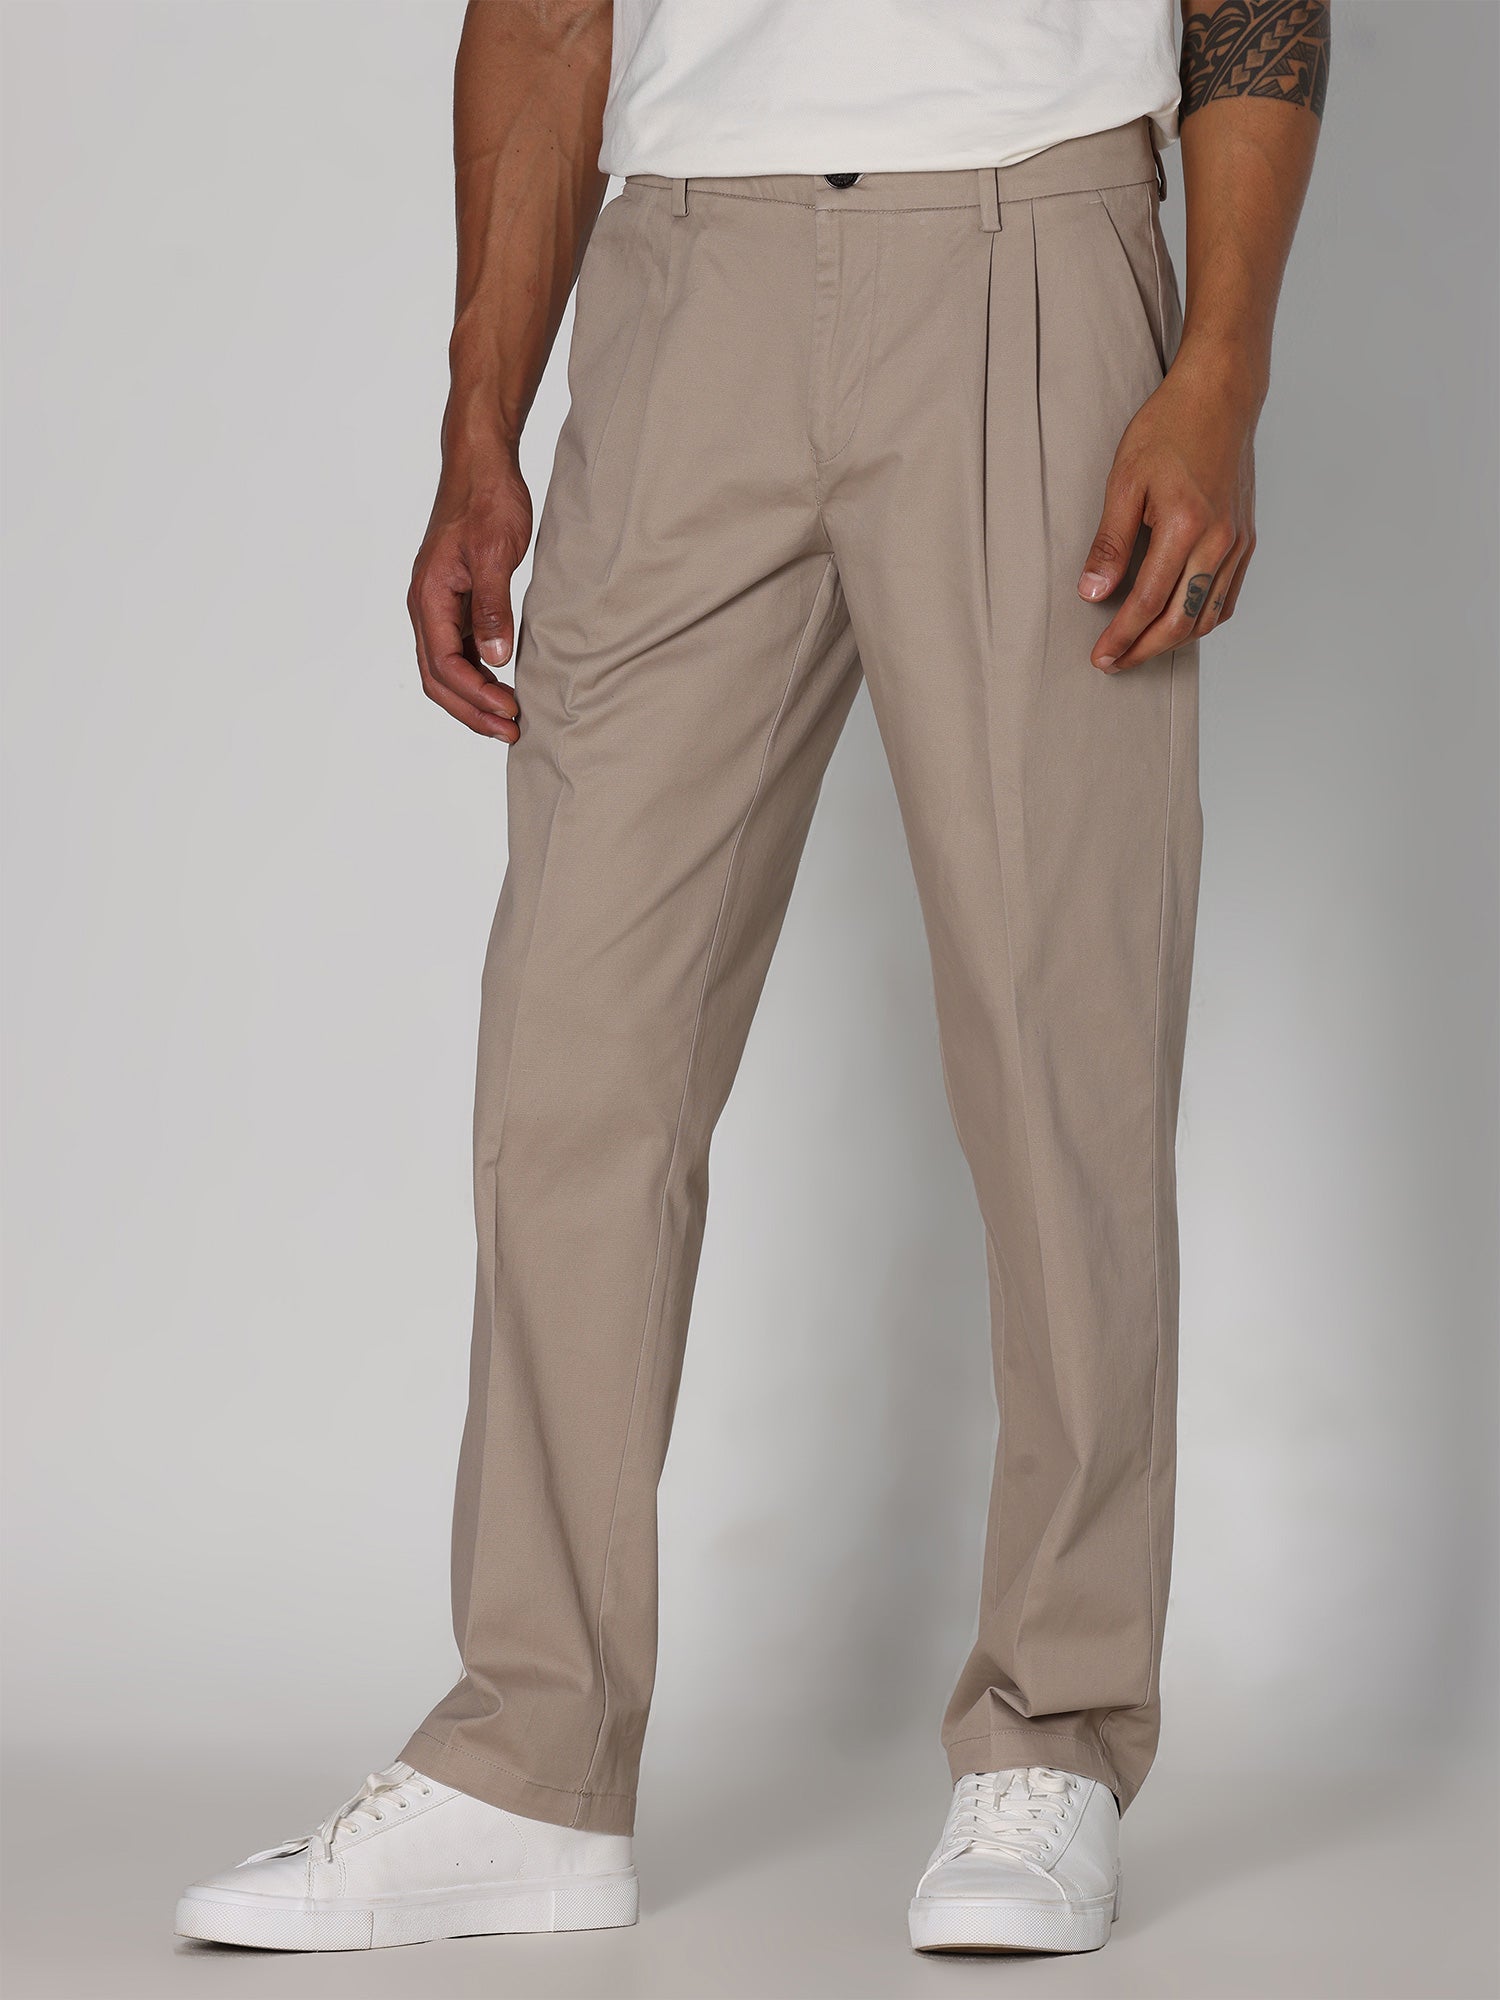 VAN HEUSEN SPORT Tapered Men Khaki Trousers - Buy VAN HEUSEN SPORT Tapered  Men Khaki Trousers Online at Best Prices in India | Flipkart.com